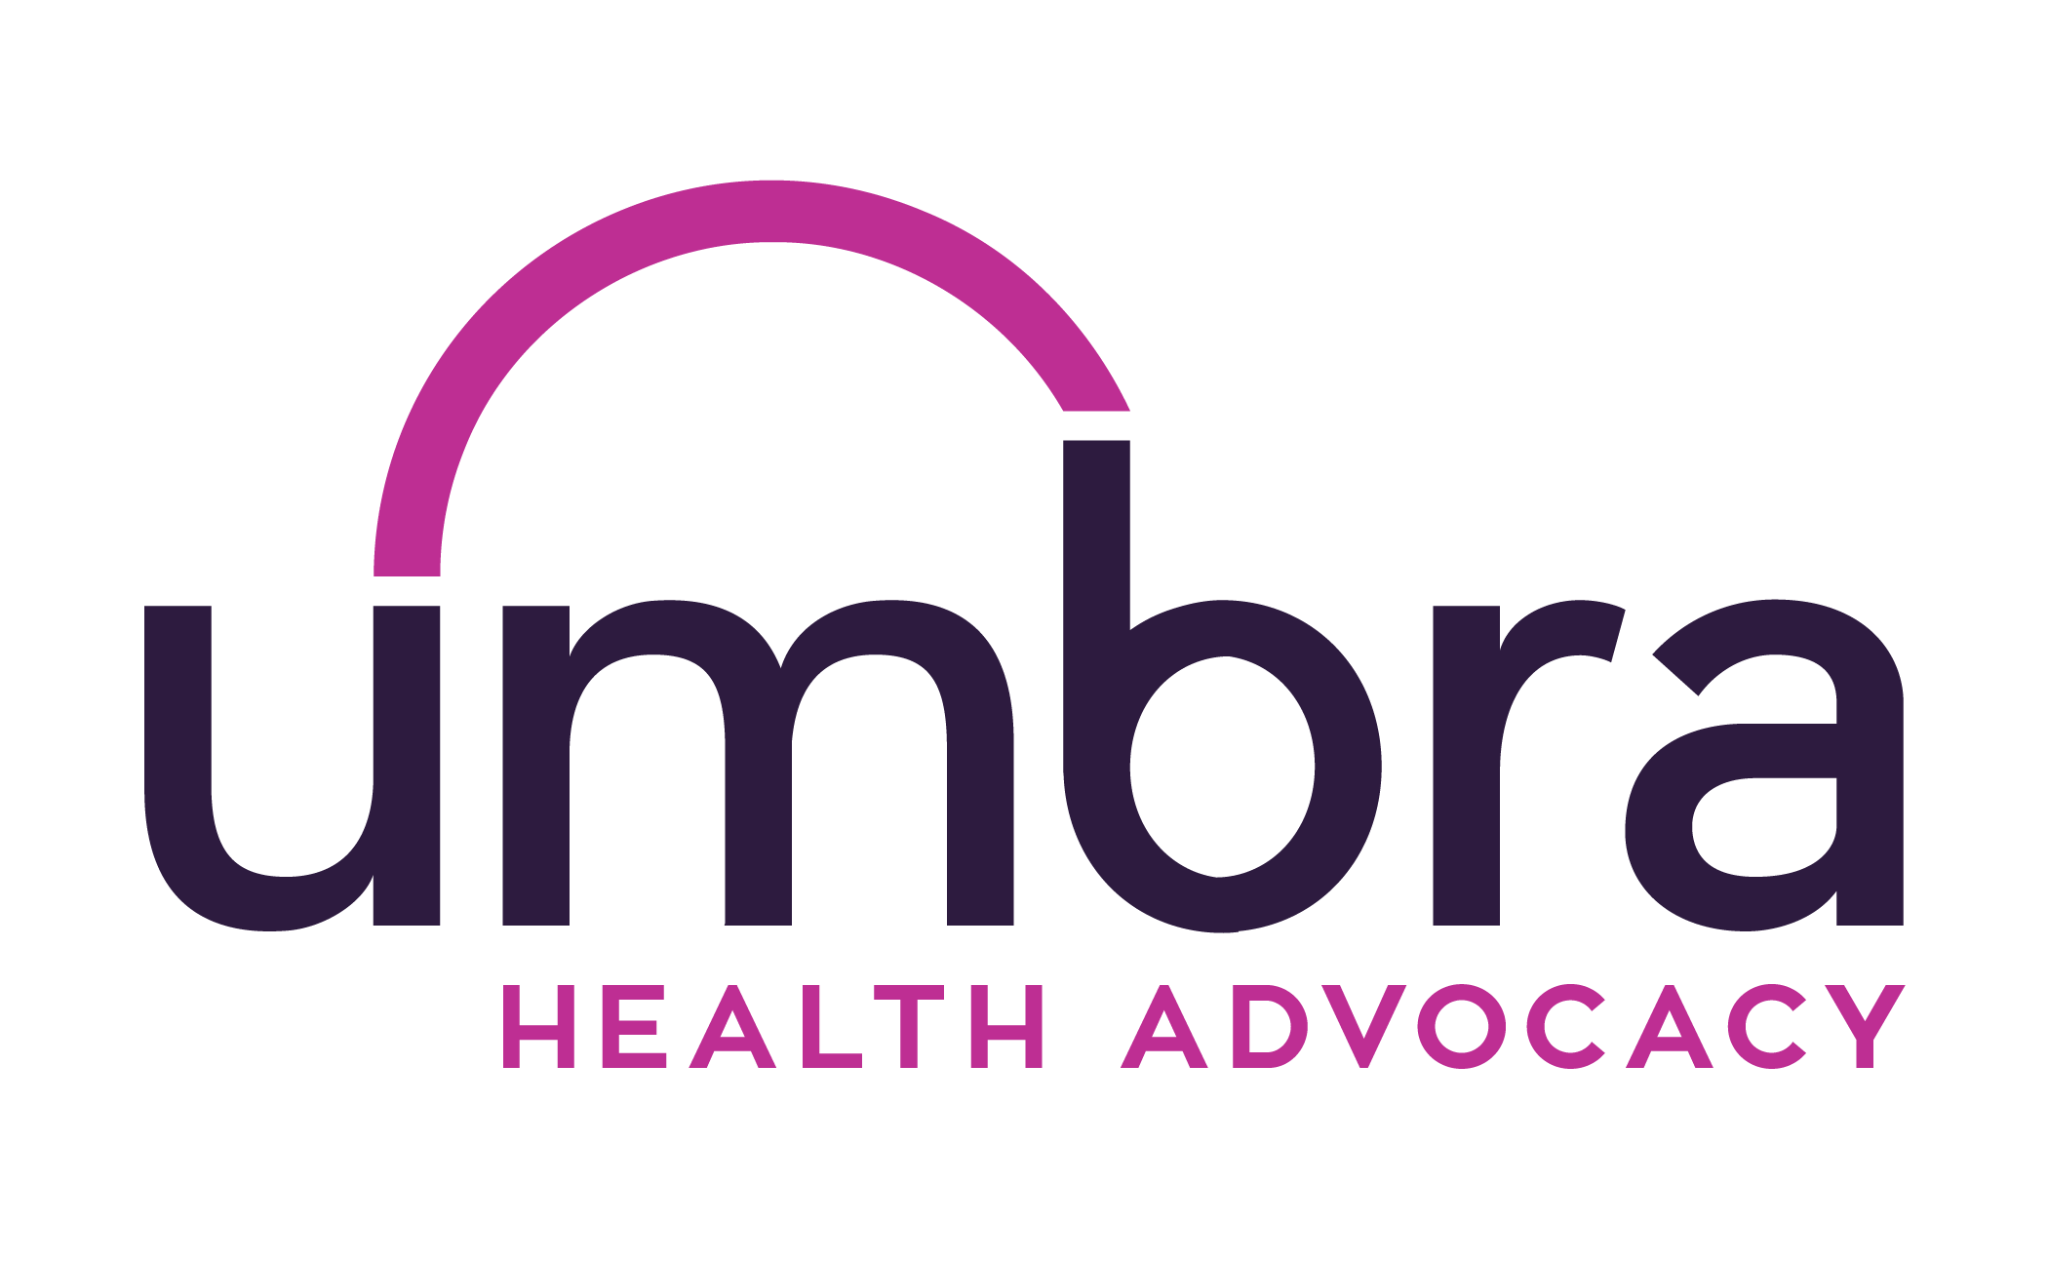 Umbra Health Advocacy